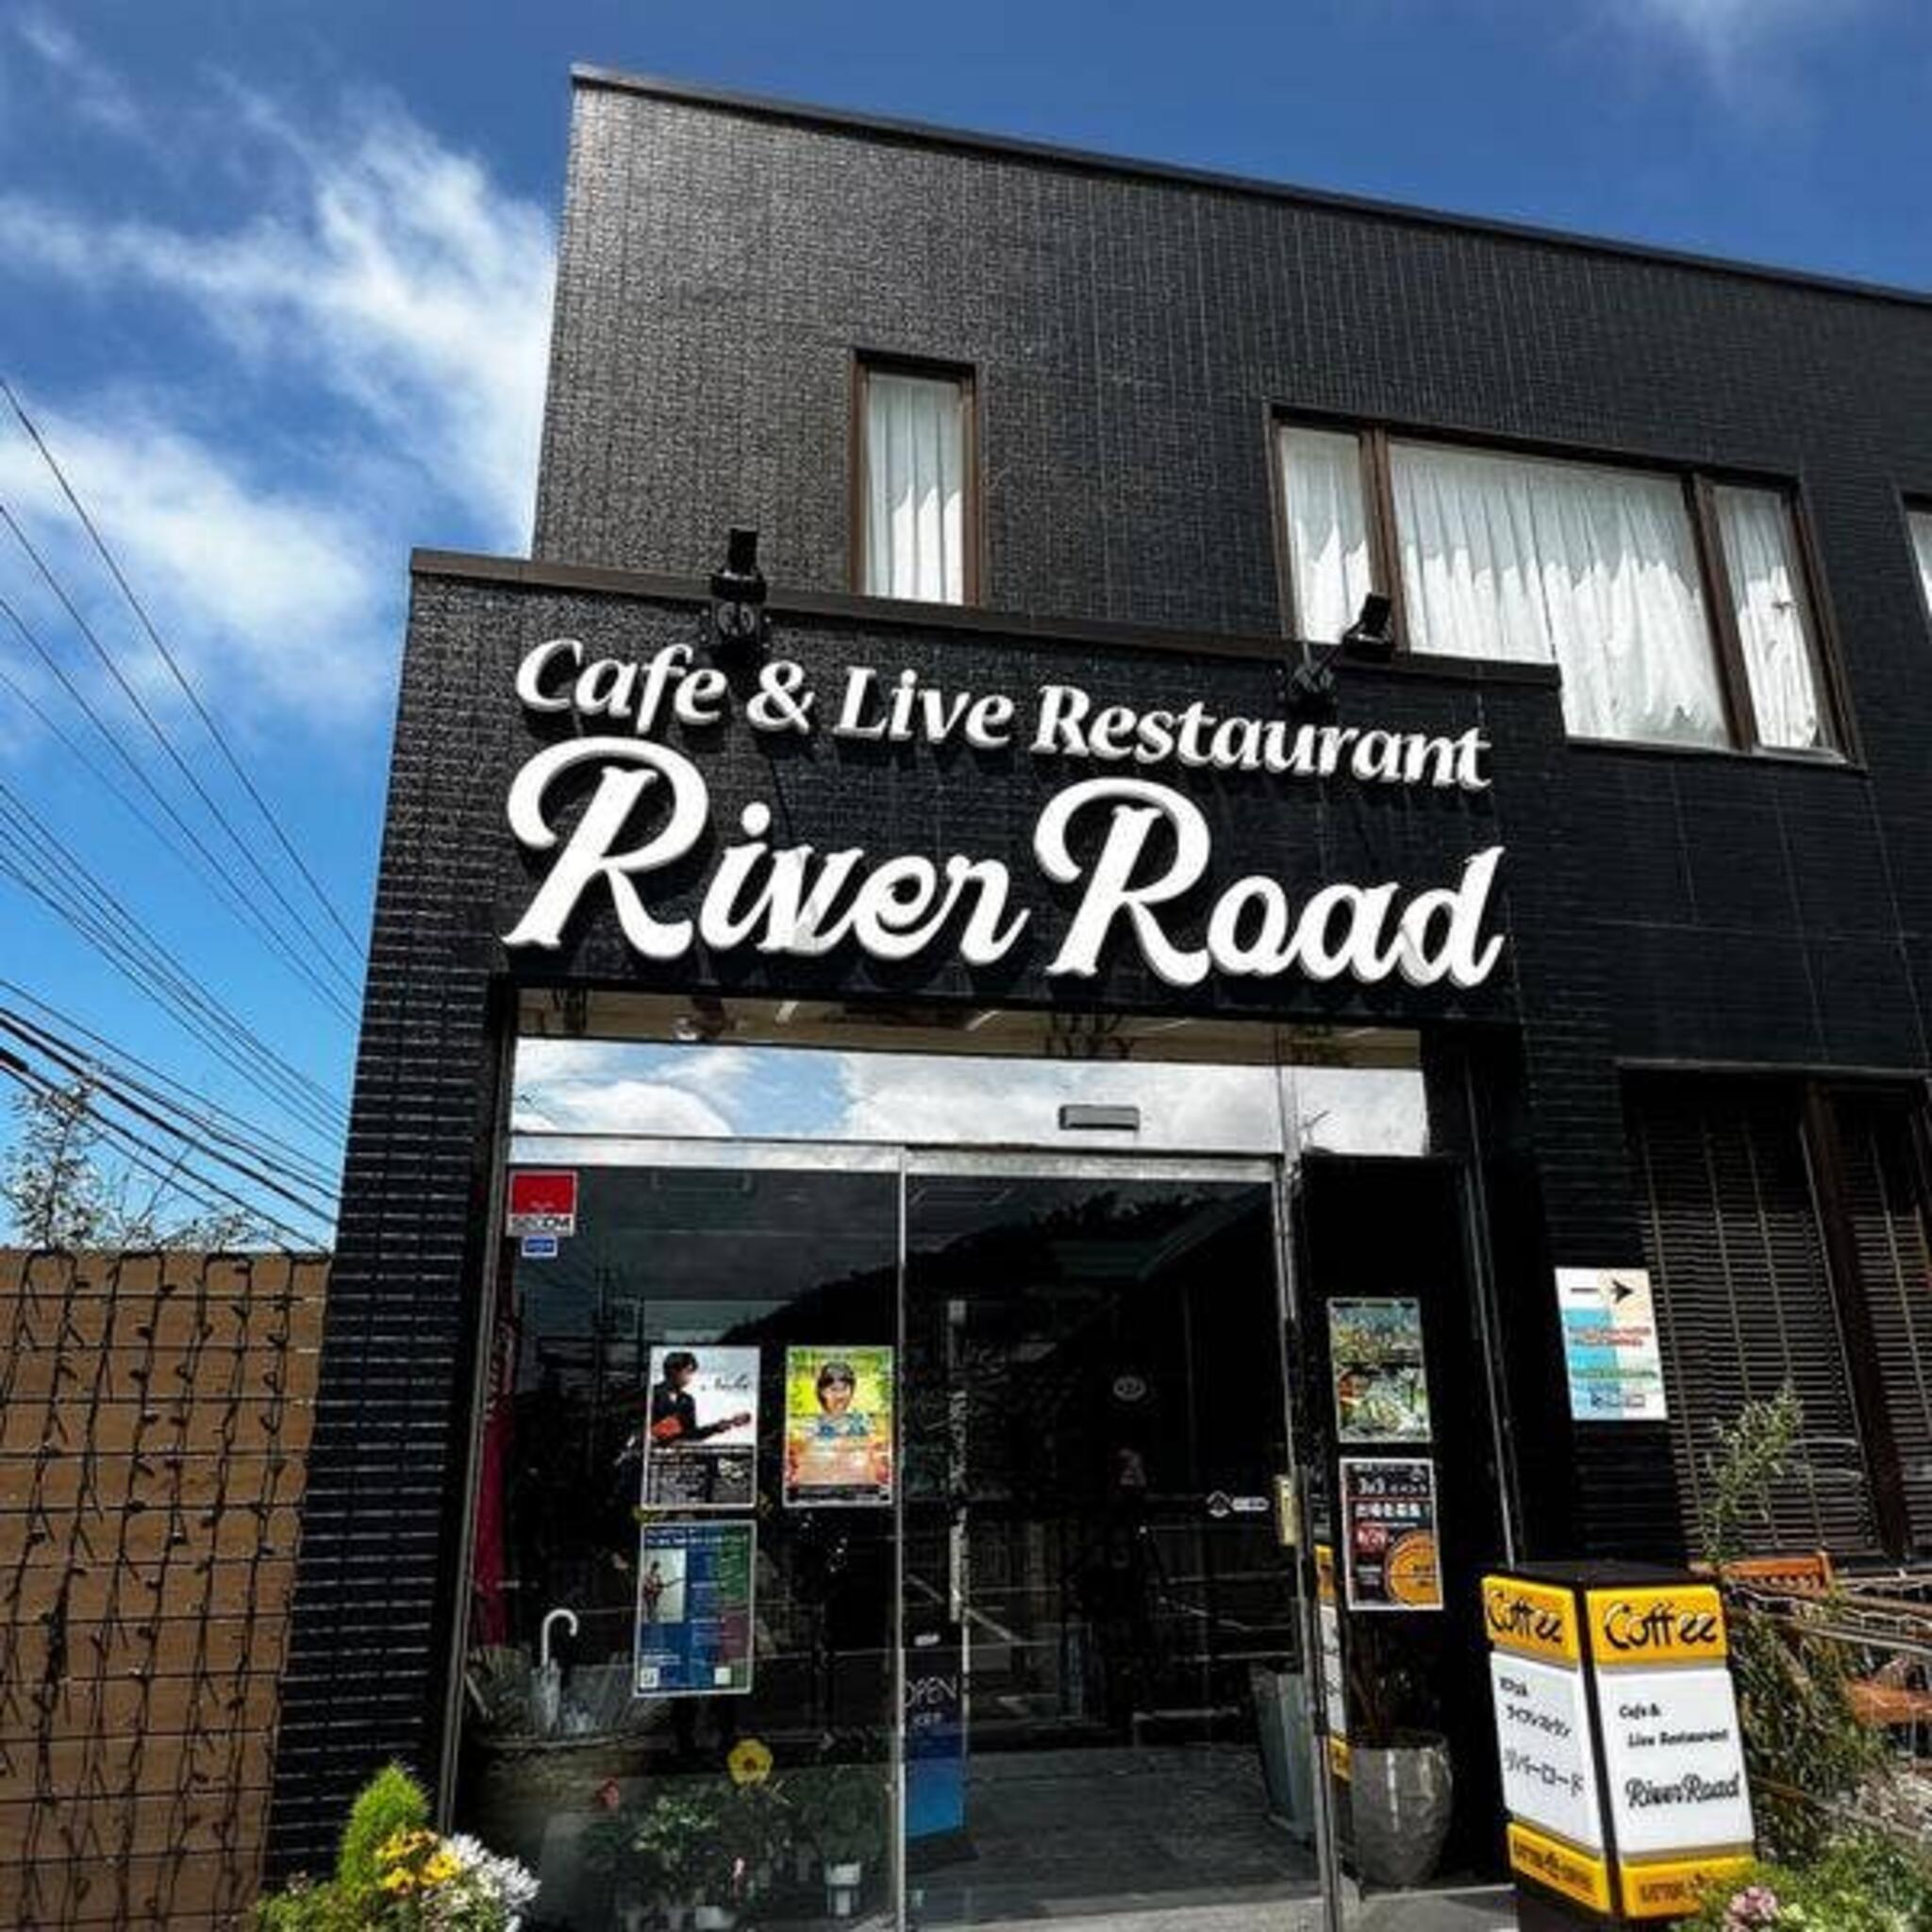 Cafe&Live Restaurant RiverRoadの代表写真7